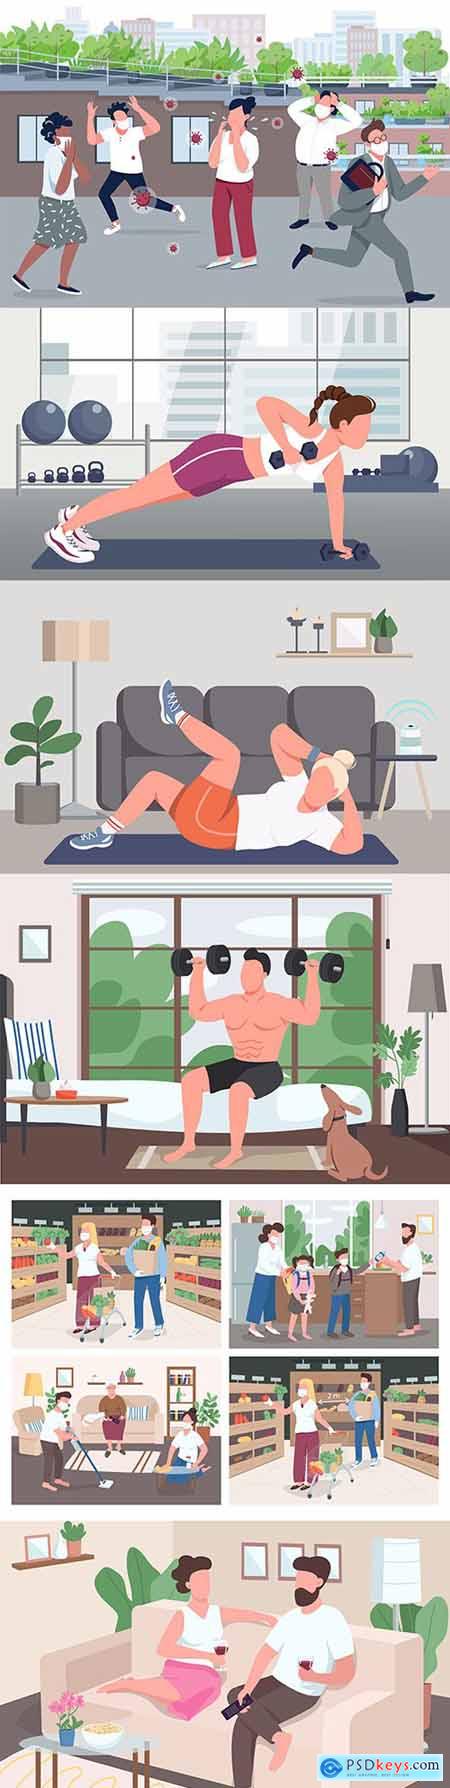 Fitness and home training in quarantine cartoon illustration